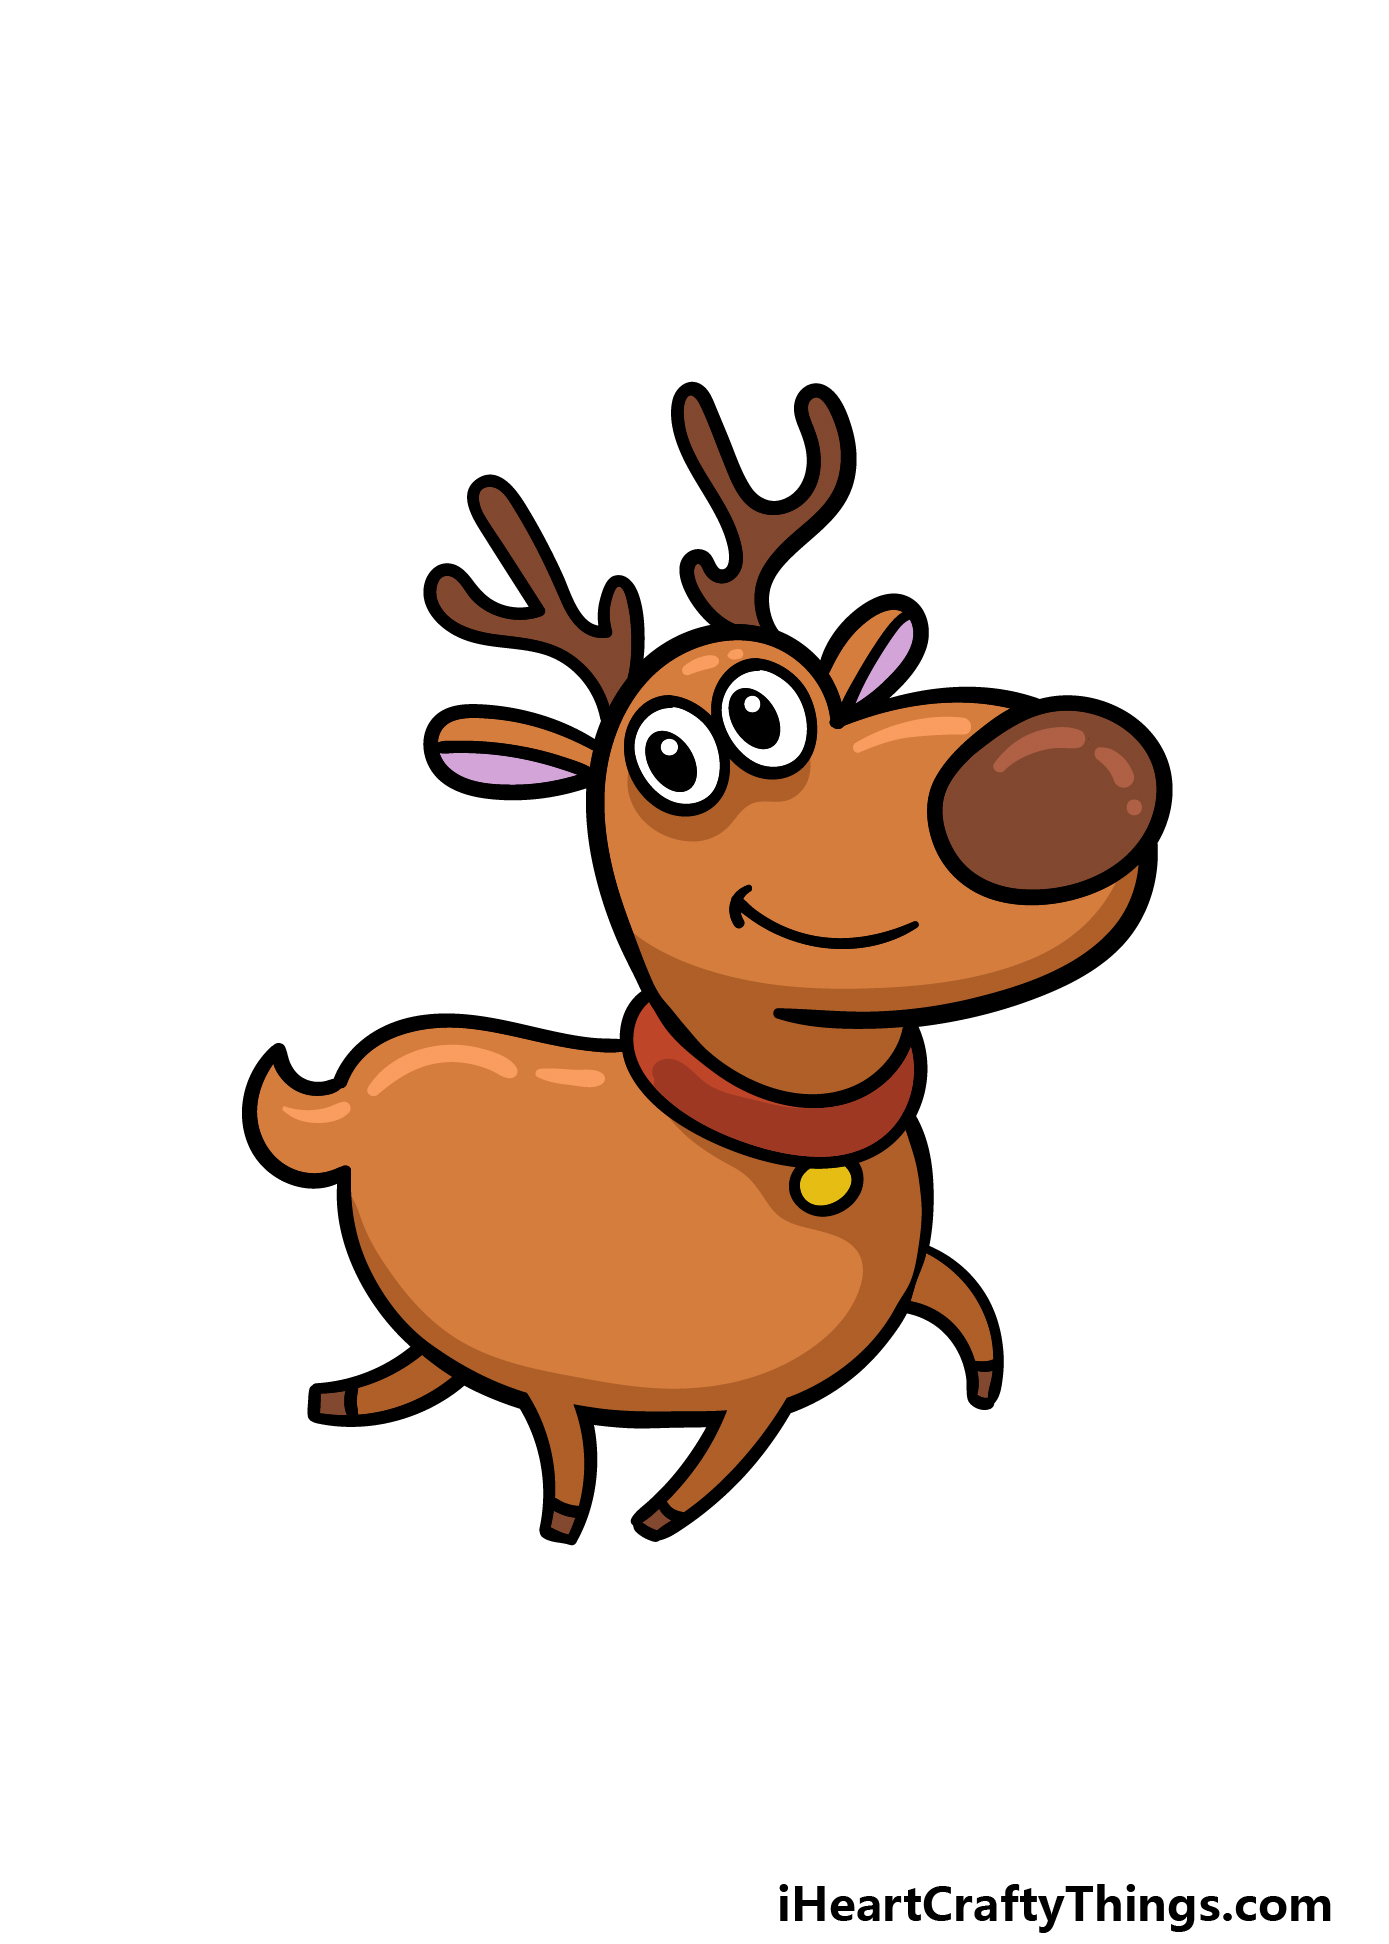 Cartoon Reindeer Drawing - How To Draw A Cartoon Reindeer Step By Step